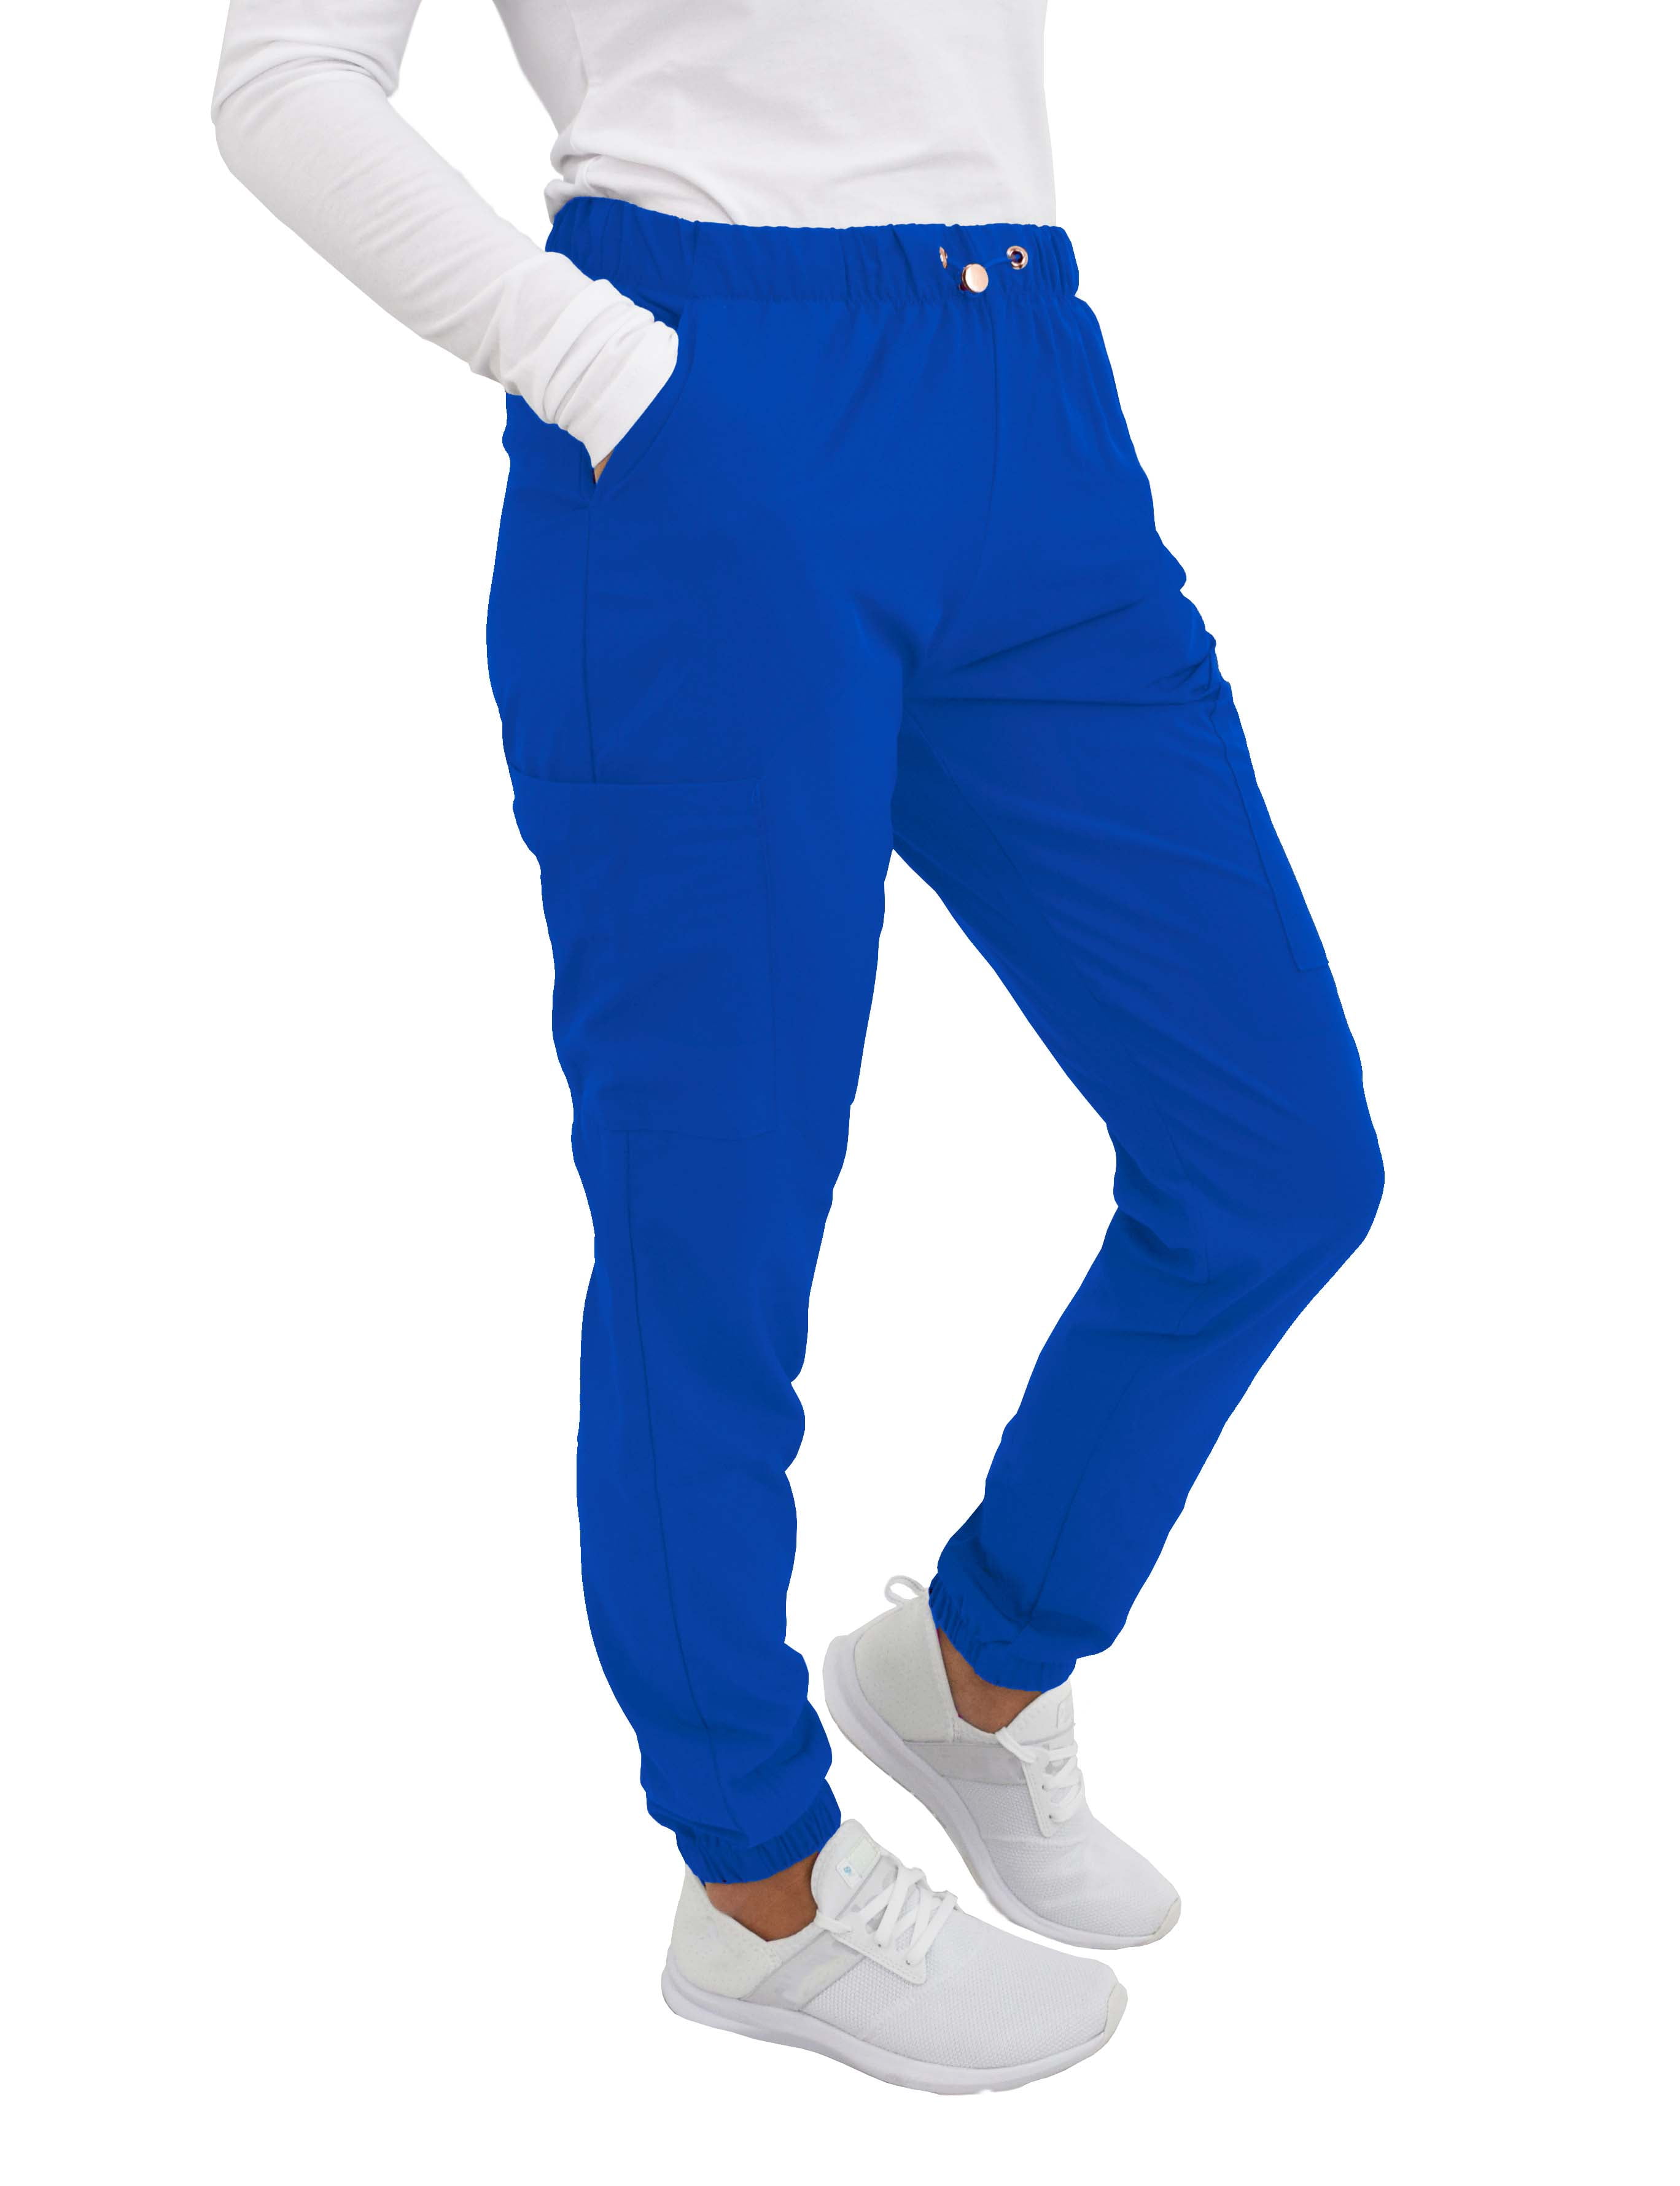 Women's Medical Nursing Slim Fit Scrub Pant GT Performance-Royal Blue/Electric - Walmart.com